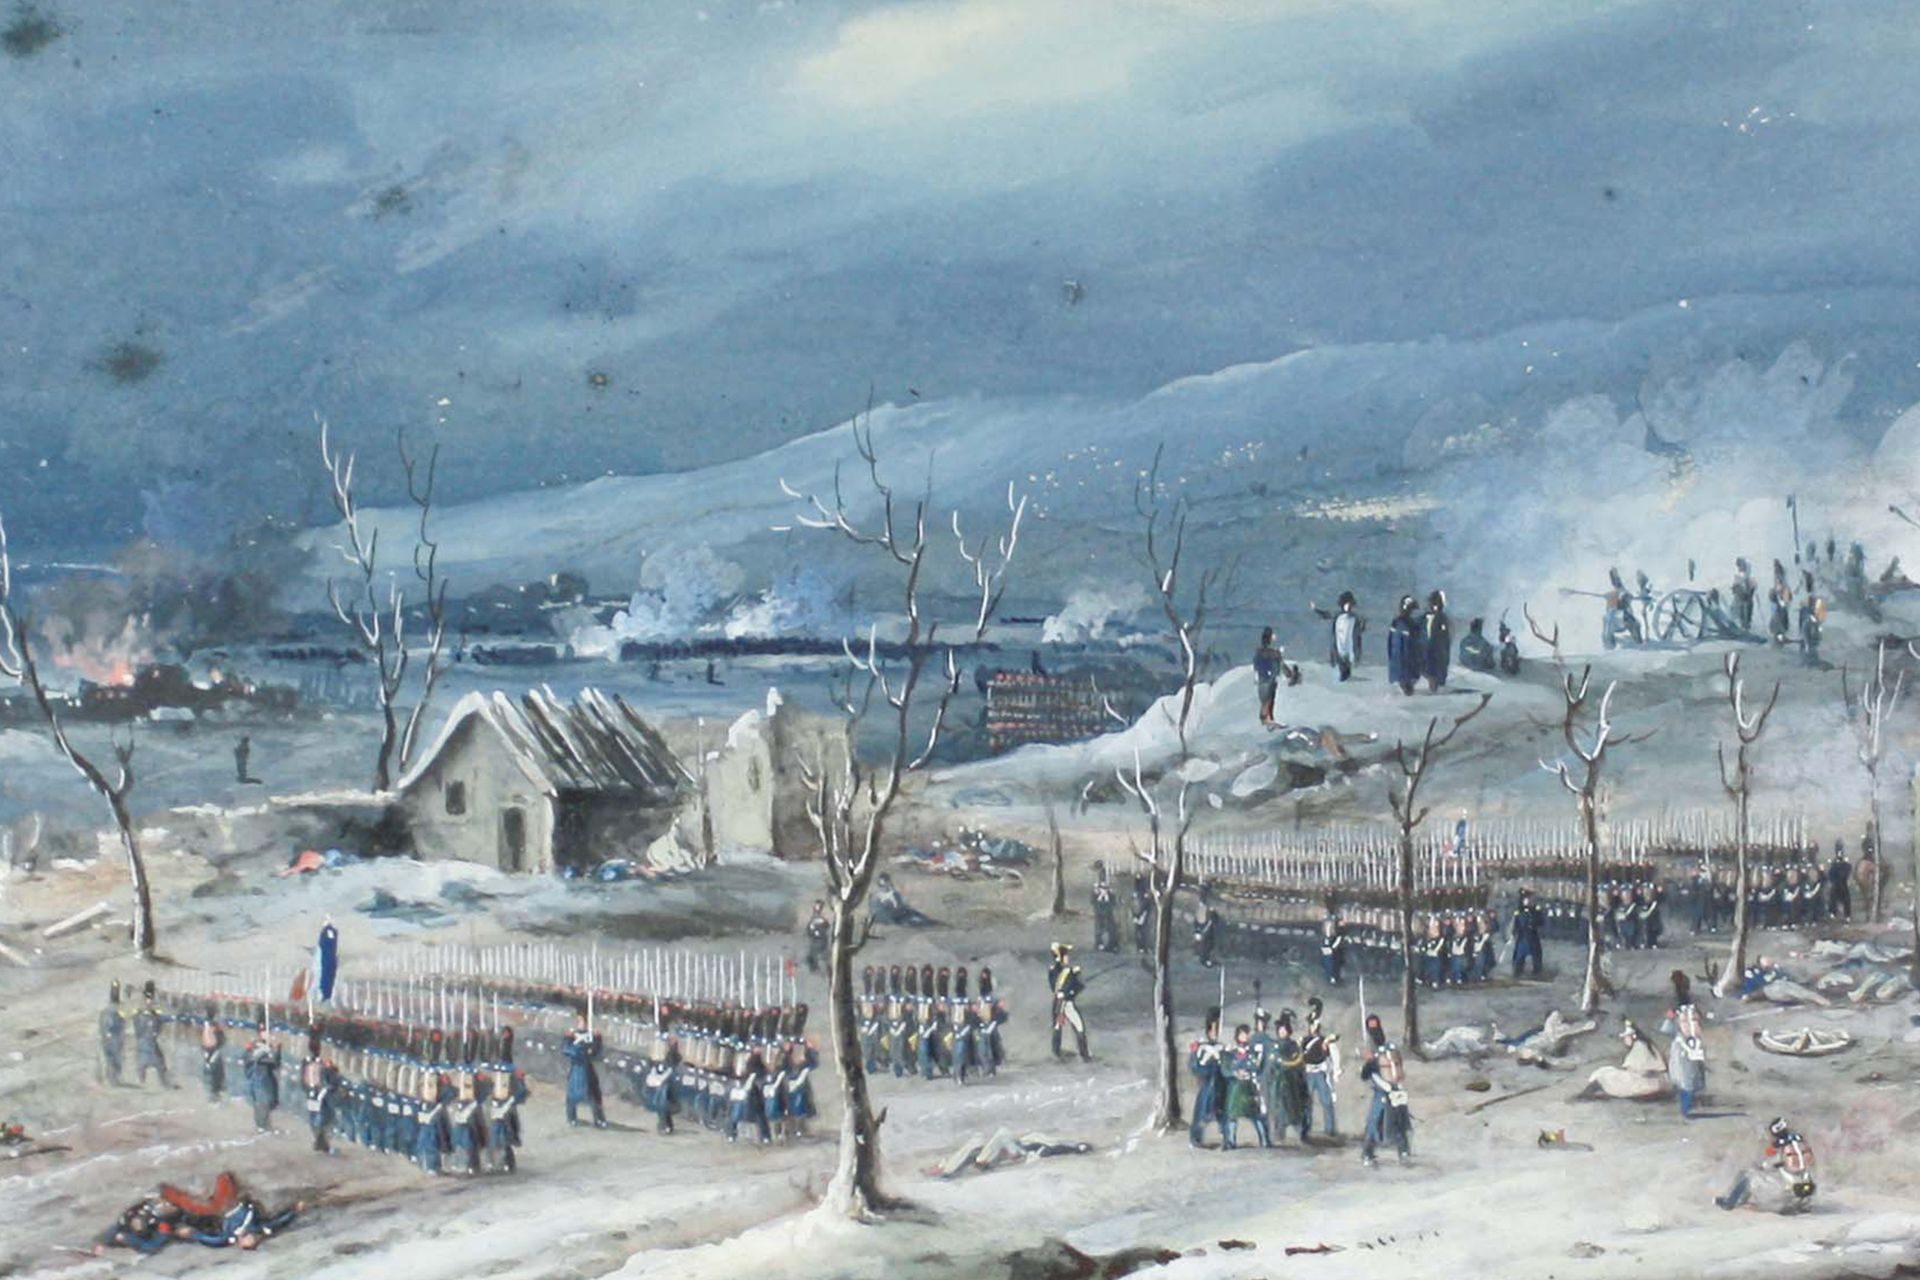 1812: the fateful Russian campaign